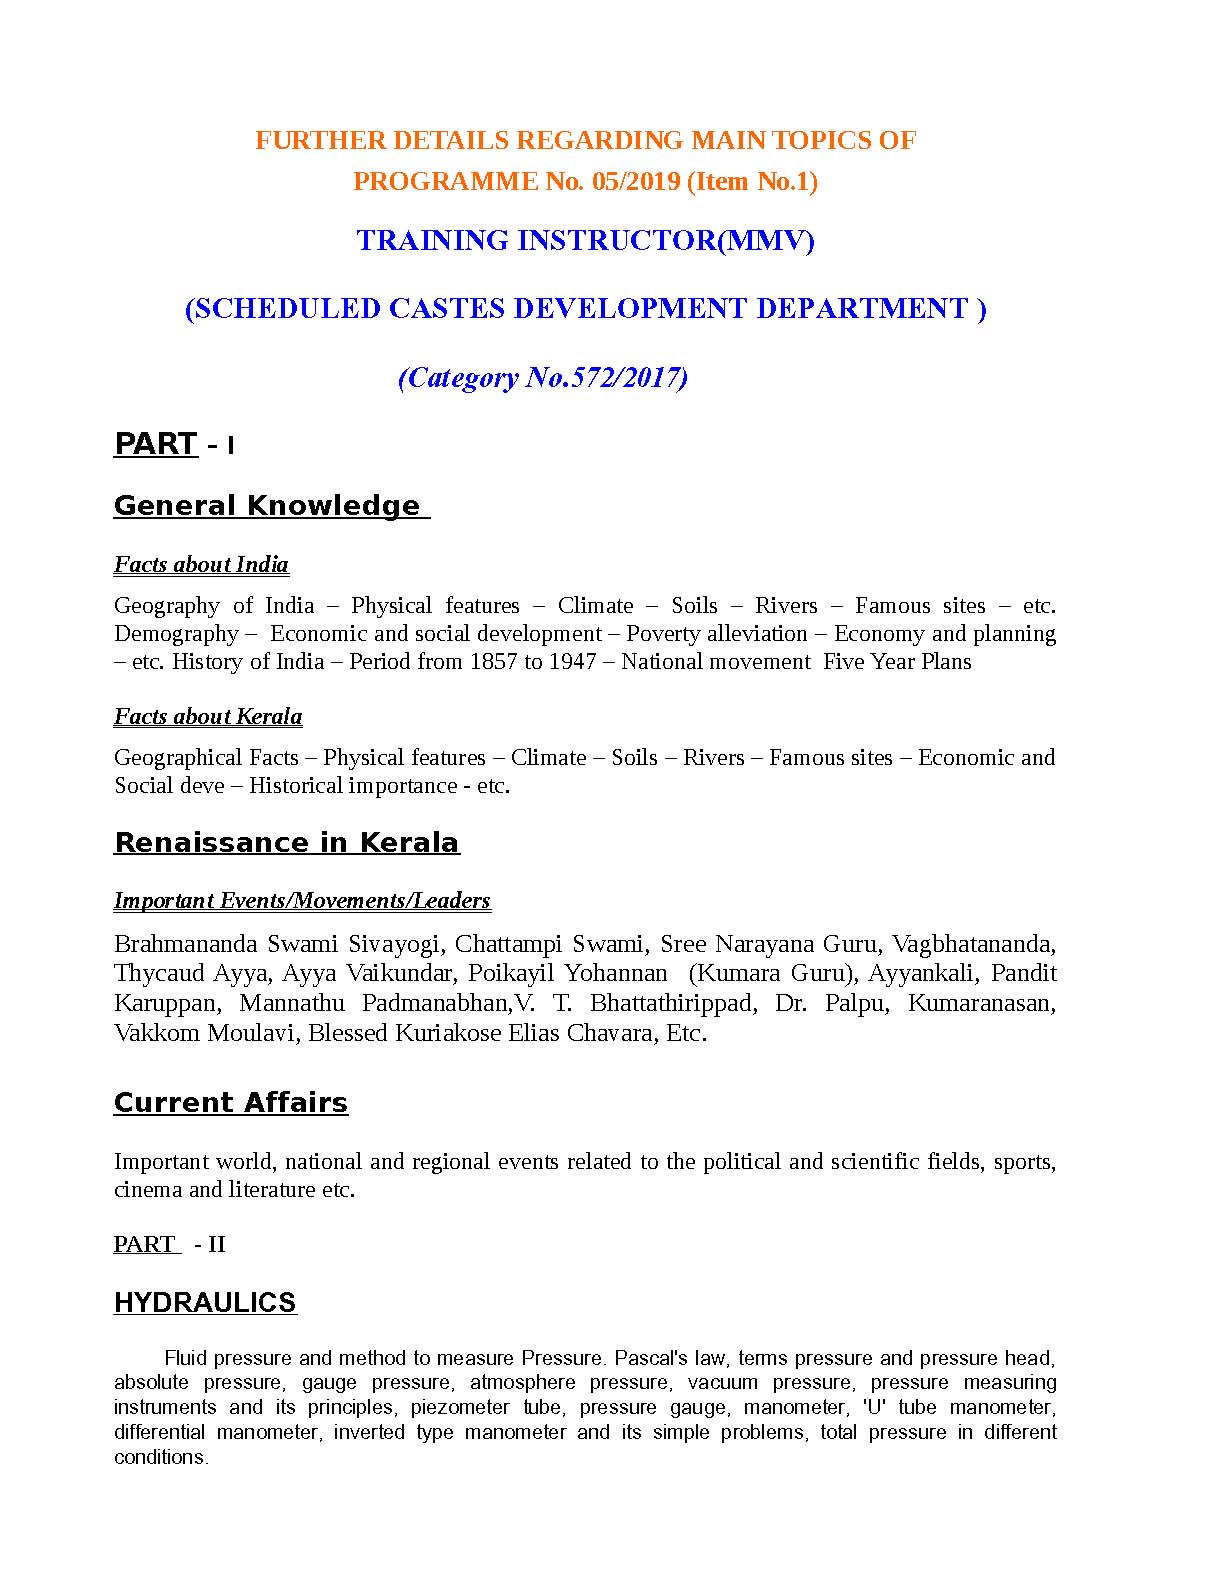 KPSC Exam Syllabus 2019 Training Instructor - Notification Image 1